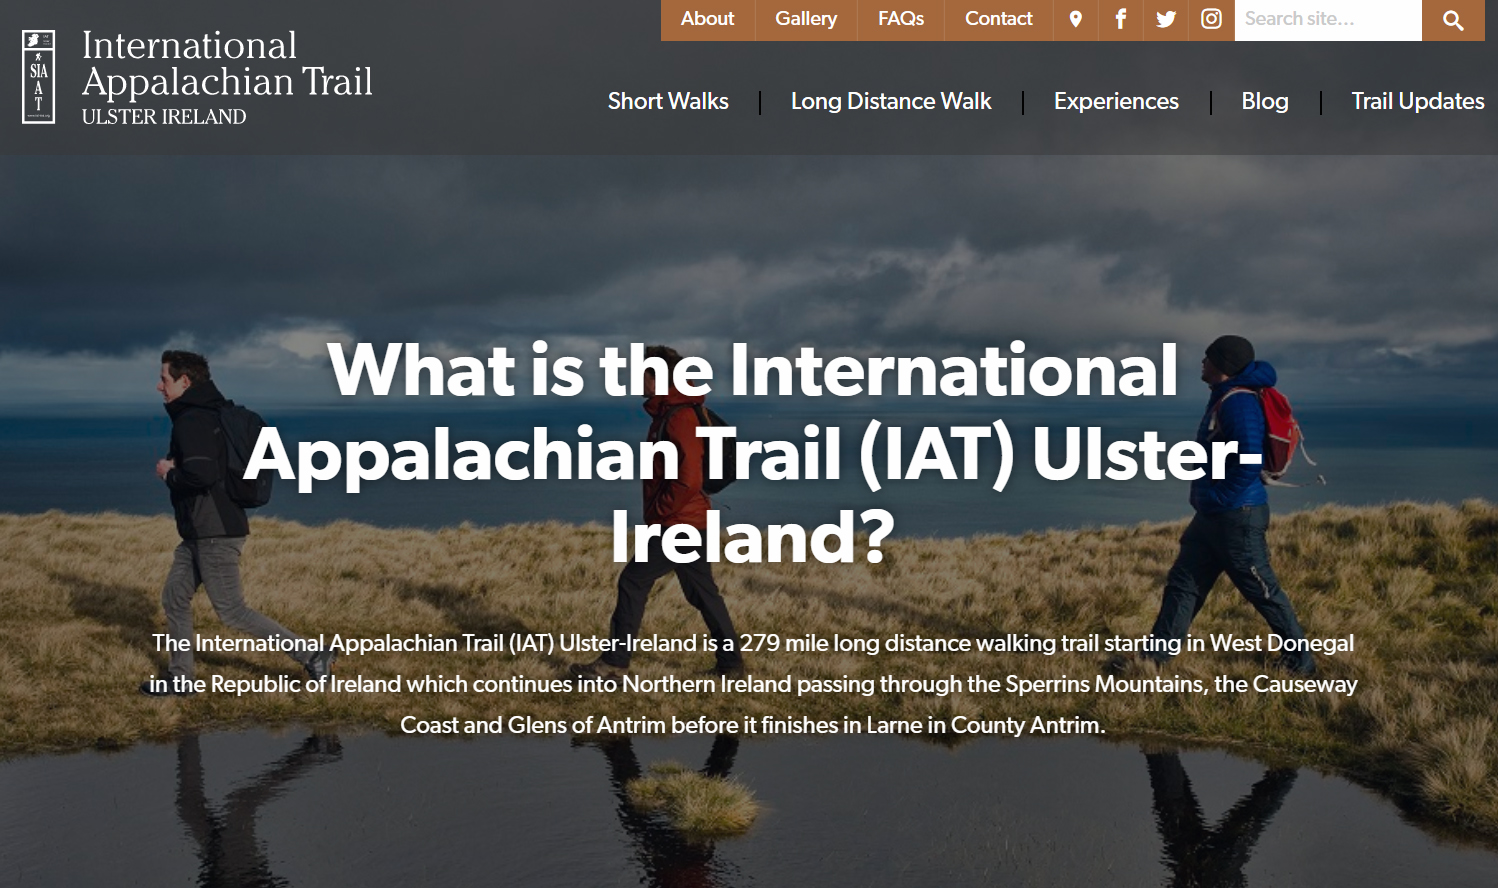 IAT Ulster Ireland